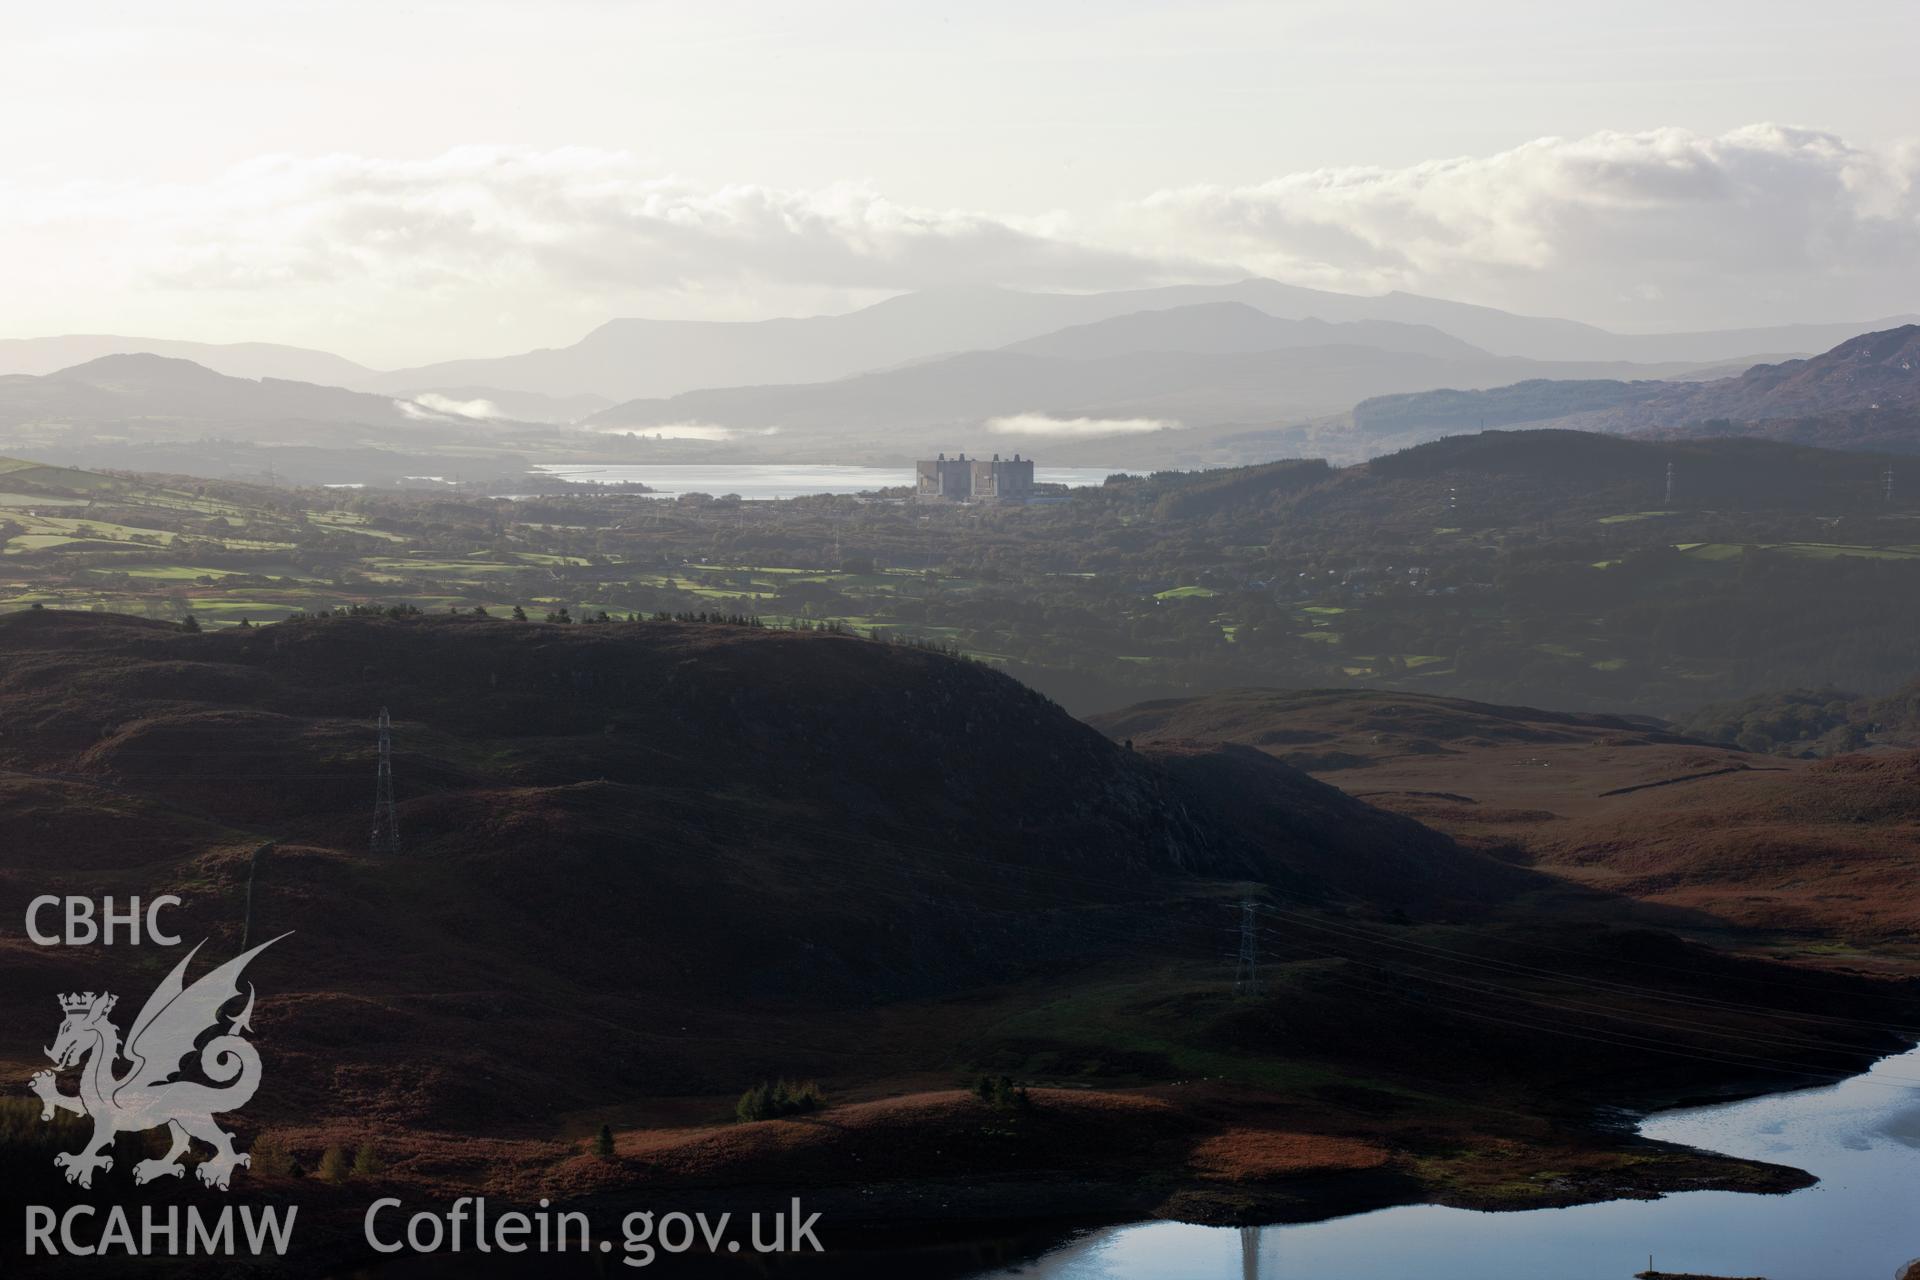 Magnox Power Station from Craig yr Wrysgan, looking south.